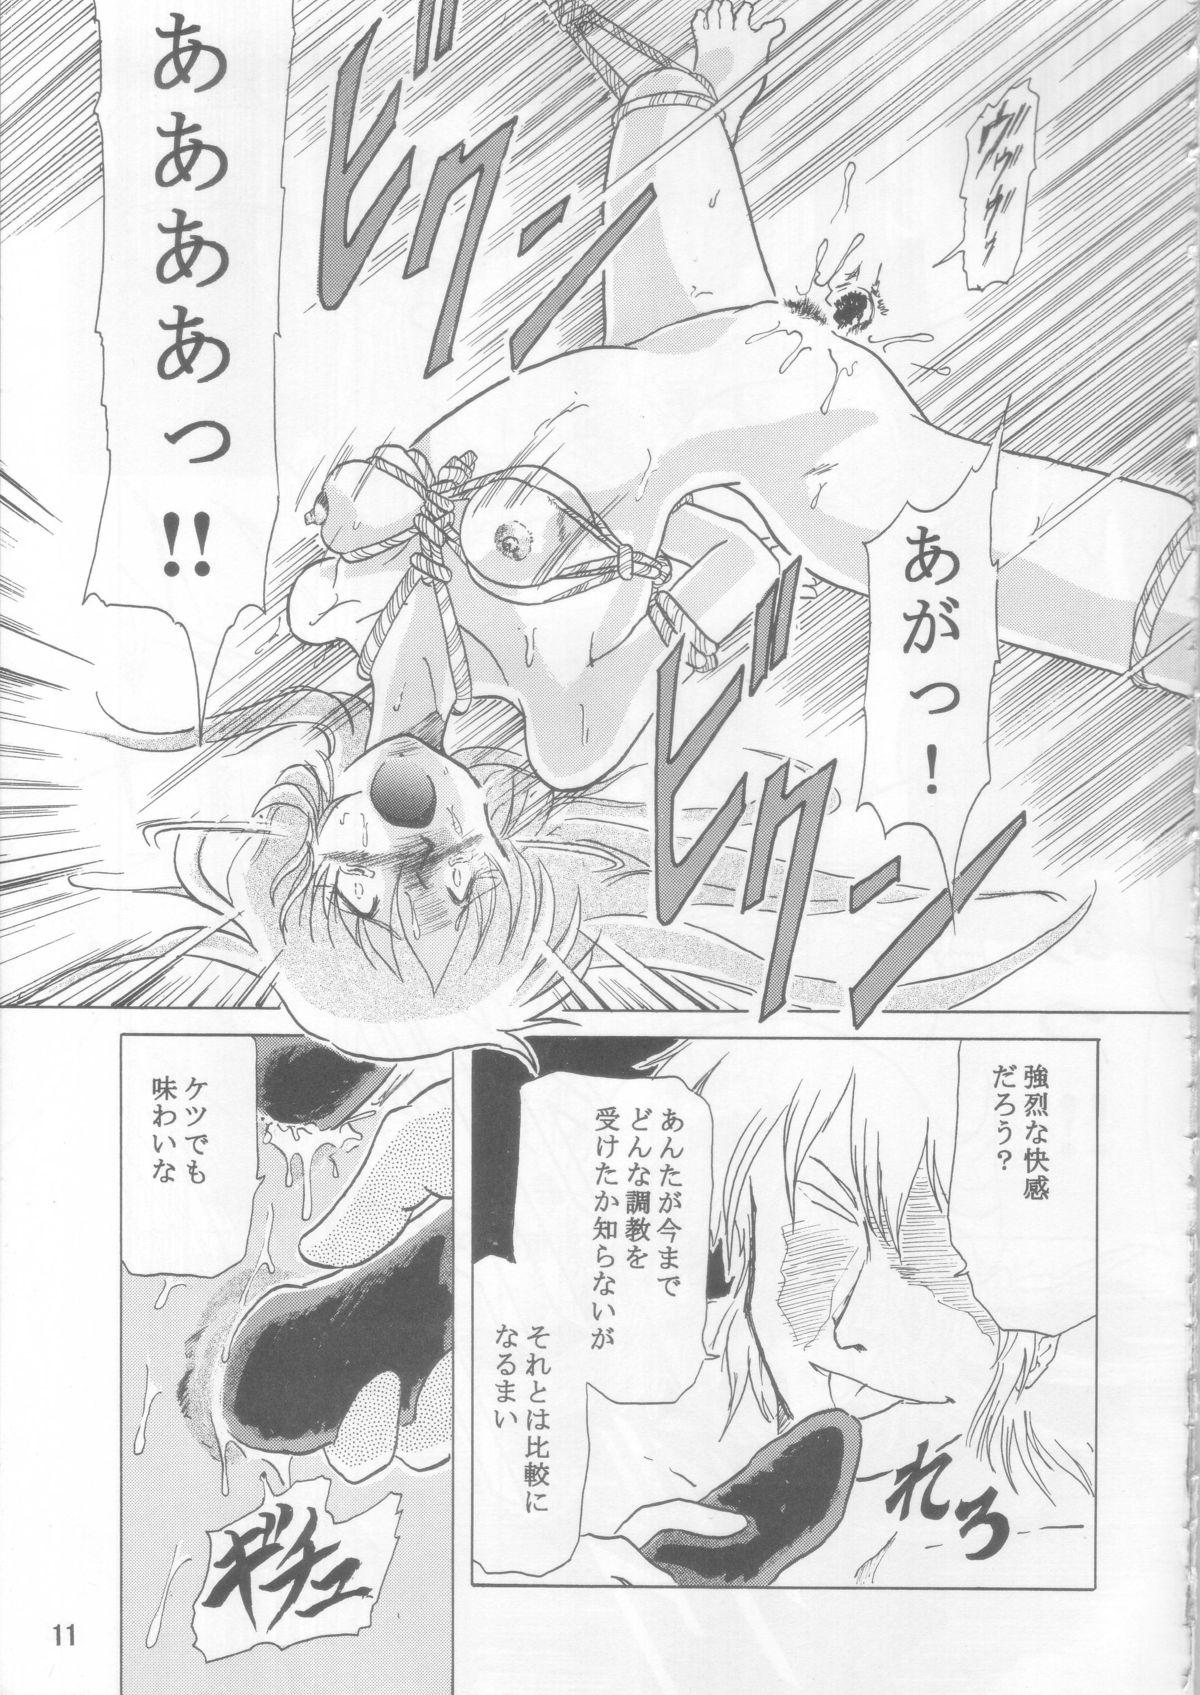 Culos Ceila sama Jiyuujizai 3 - Aura battler dunbine Banho - Page 10